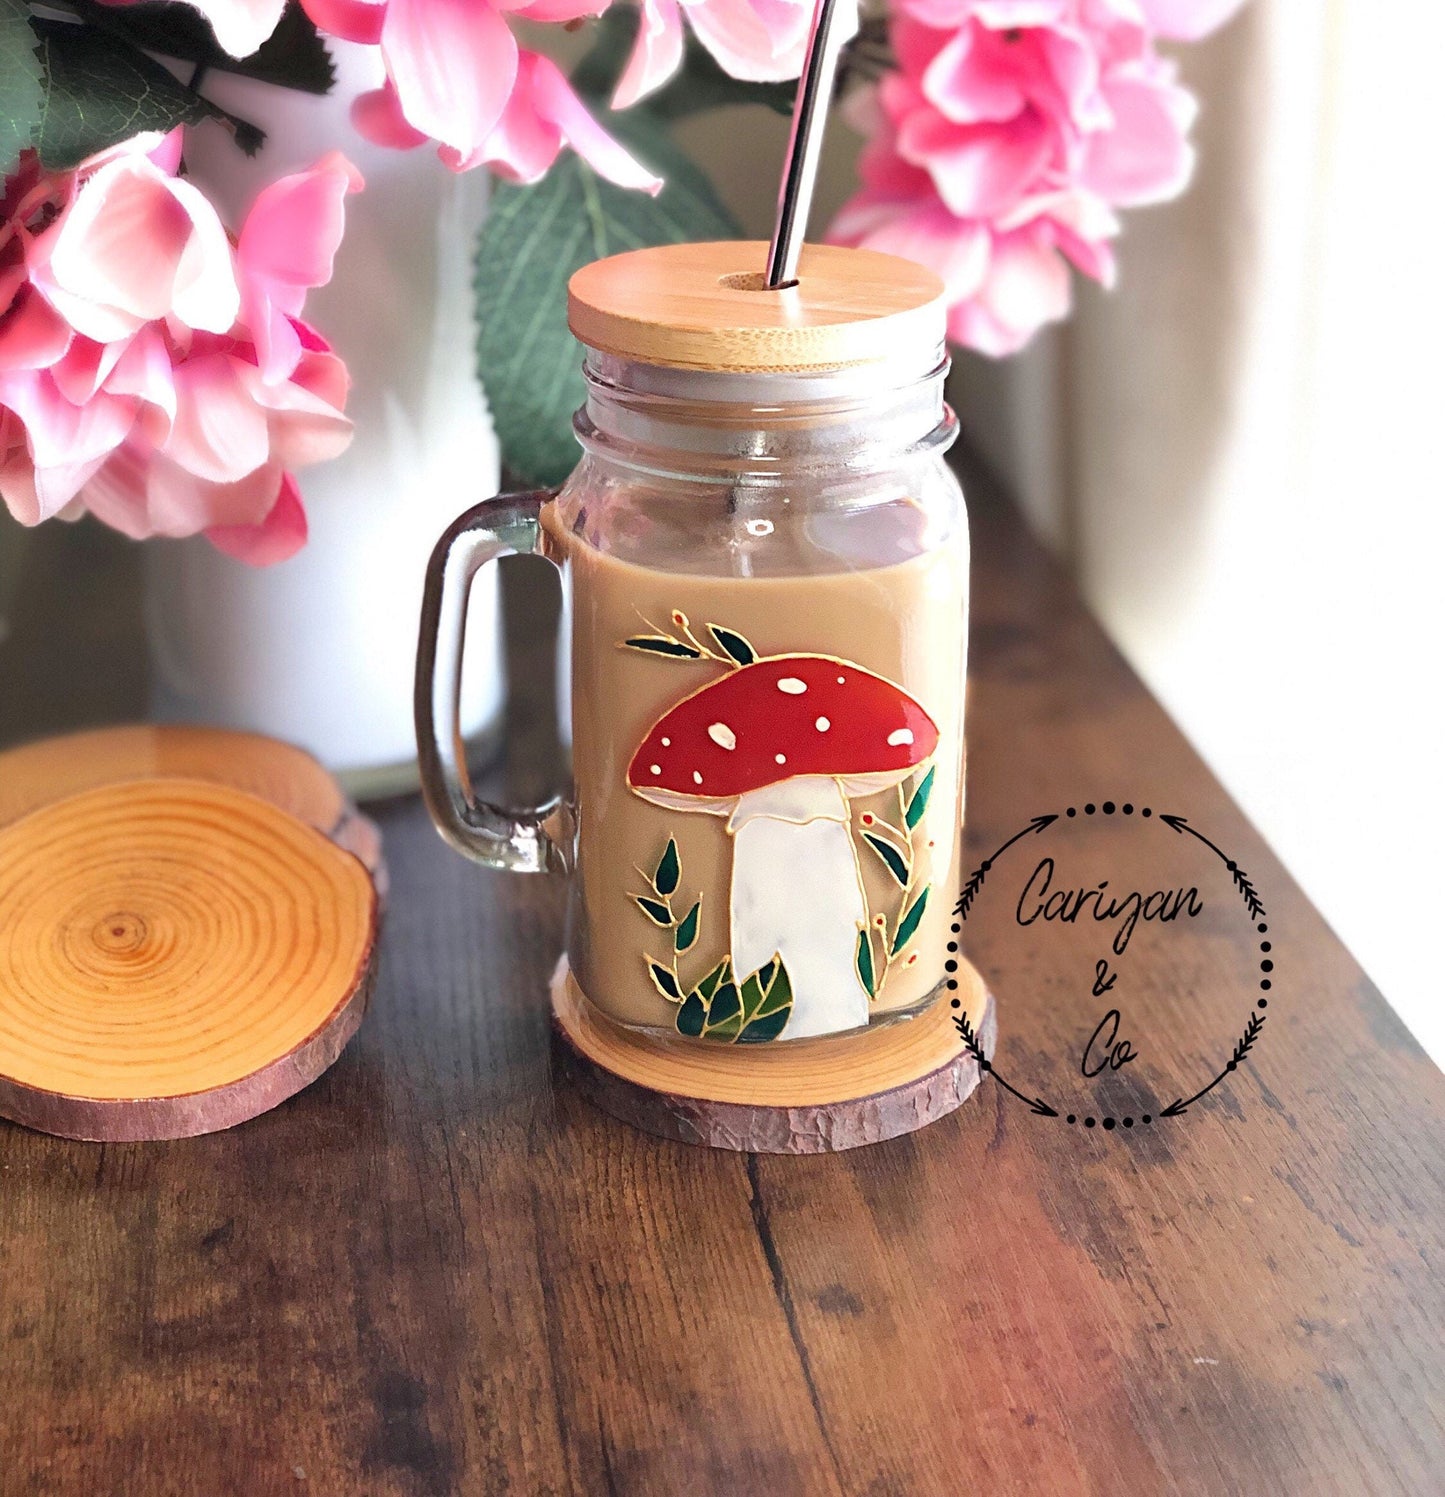 Iced CoffeeCup, Amanita Muscaria Mushroom Glass Forest Coffee Mug, Glass Cup, Travel Mug Cup, Hand Painted Glasses